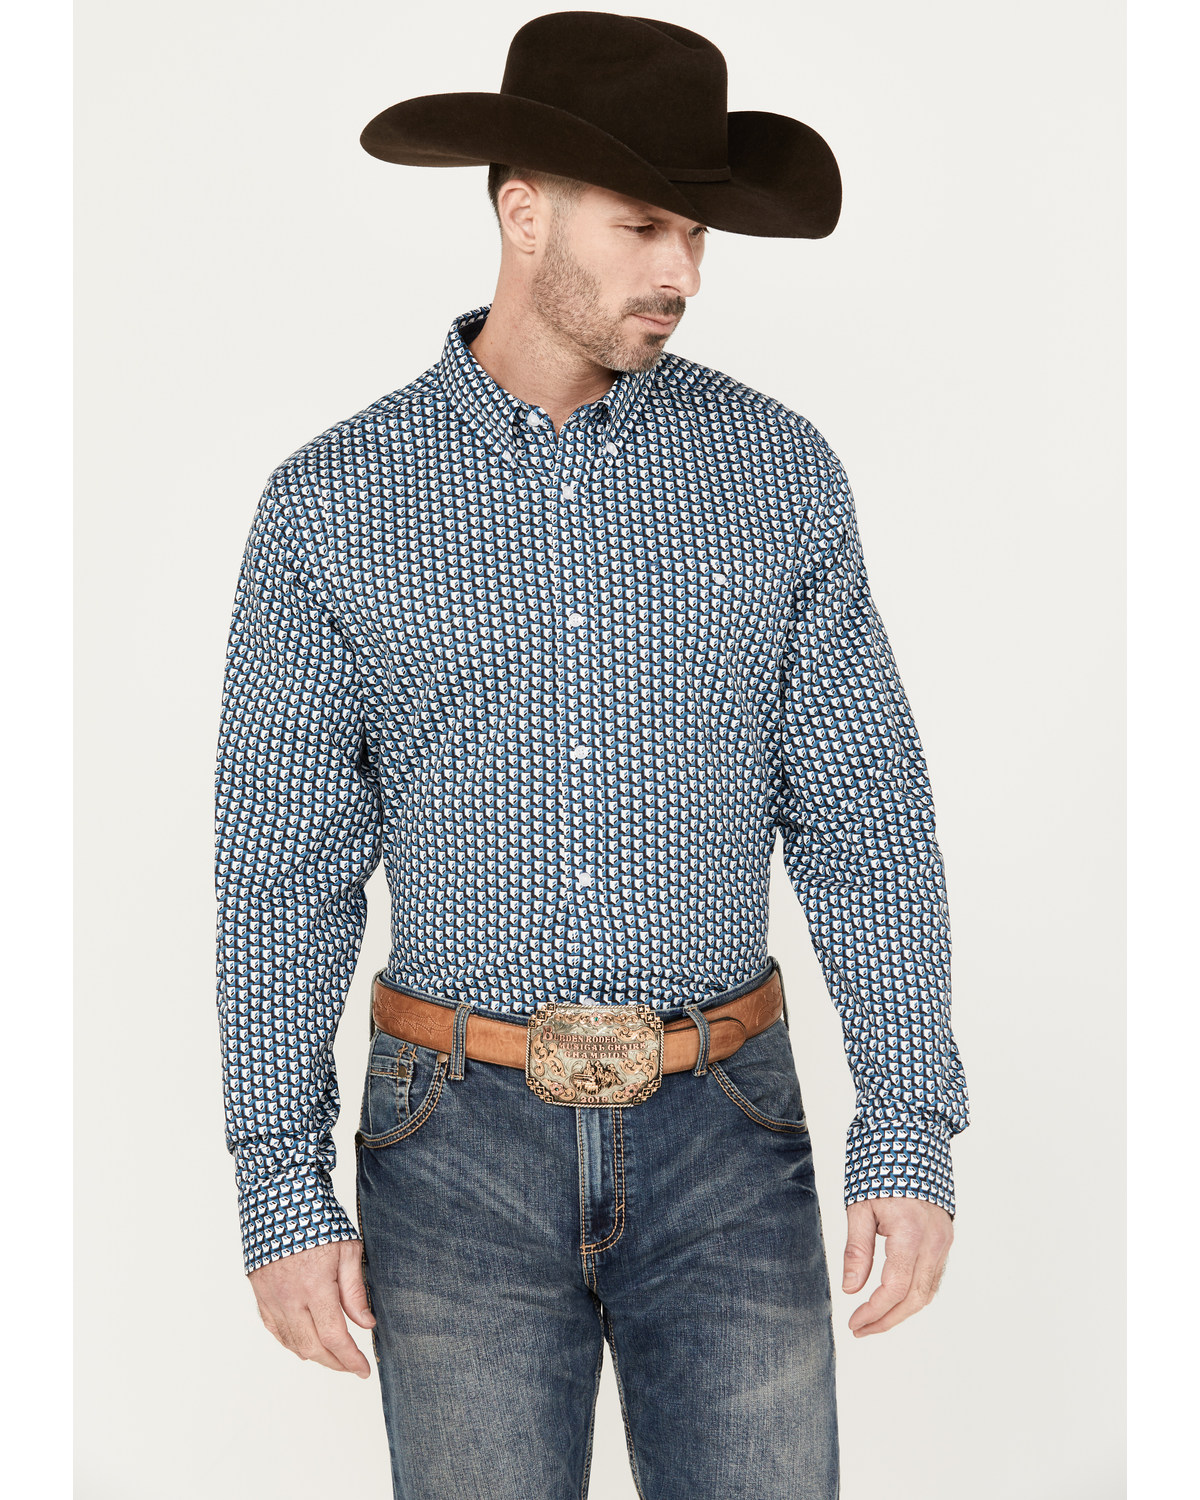 RANK 45® Men's Chute Gate Geo Print Long Sleeve Button-Down Western Shirt